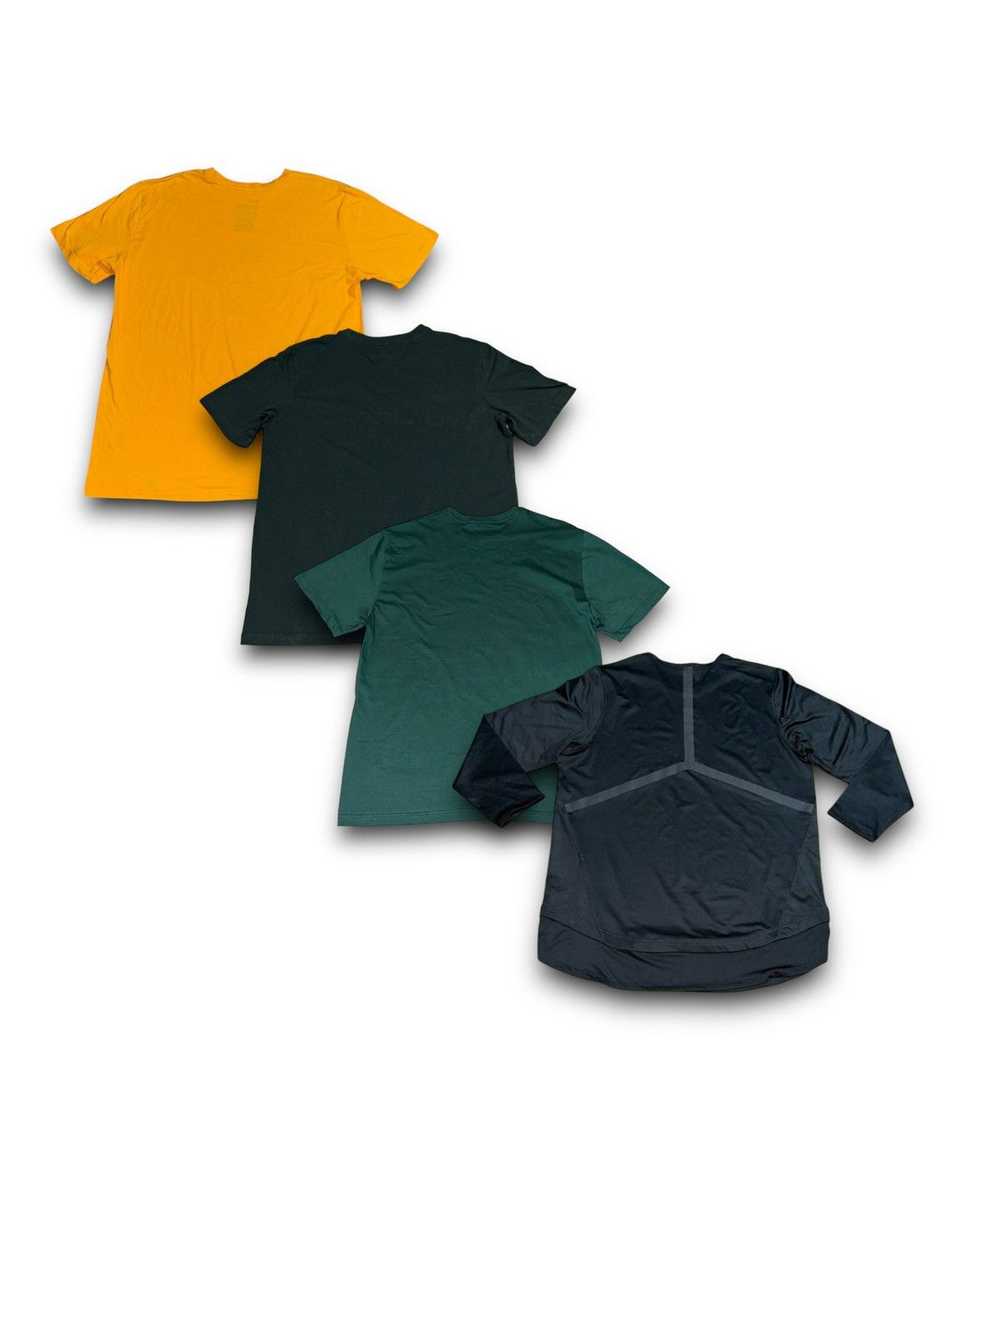 Ncaa × Nike Oregon ducks Nike shirt bundle - image 3